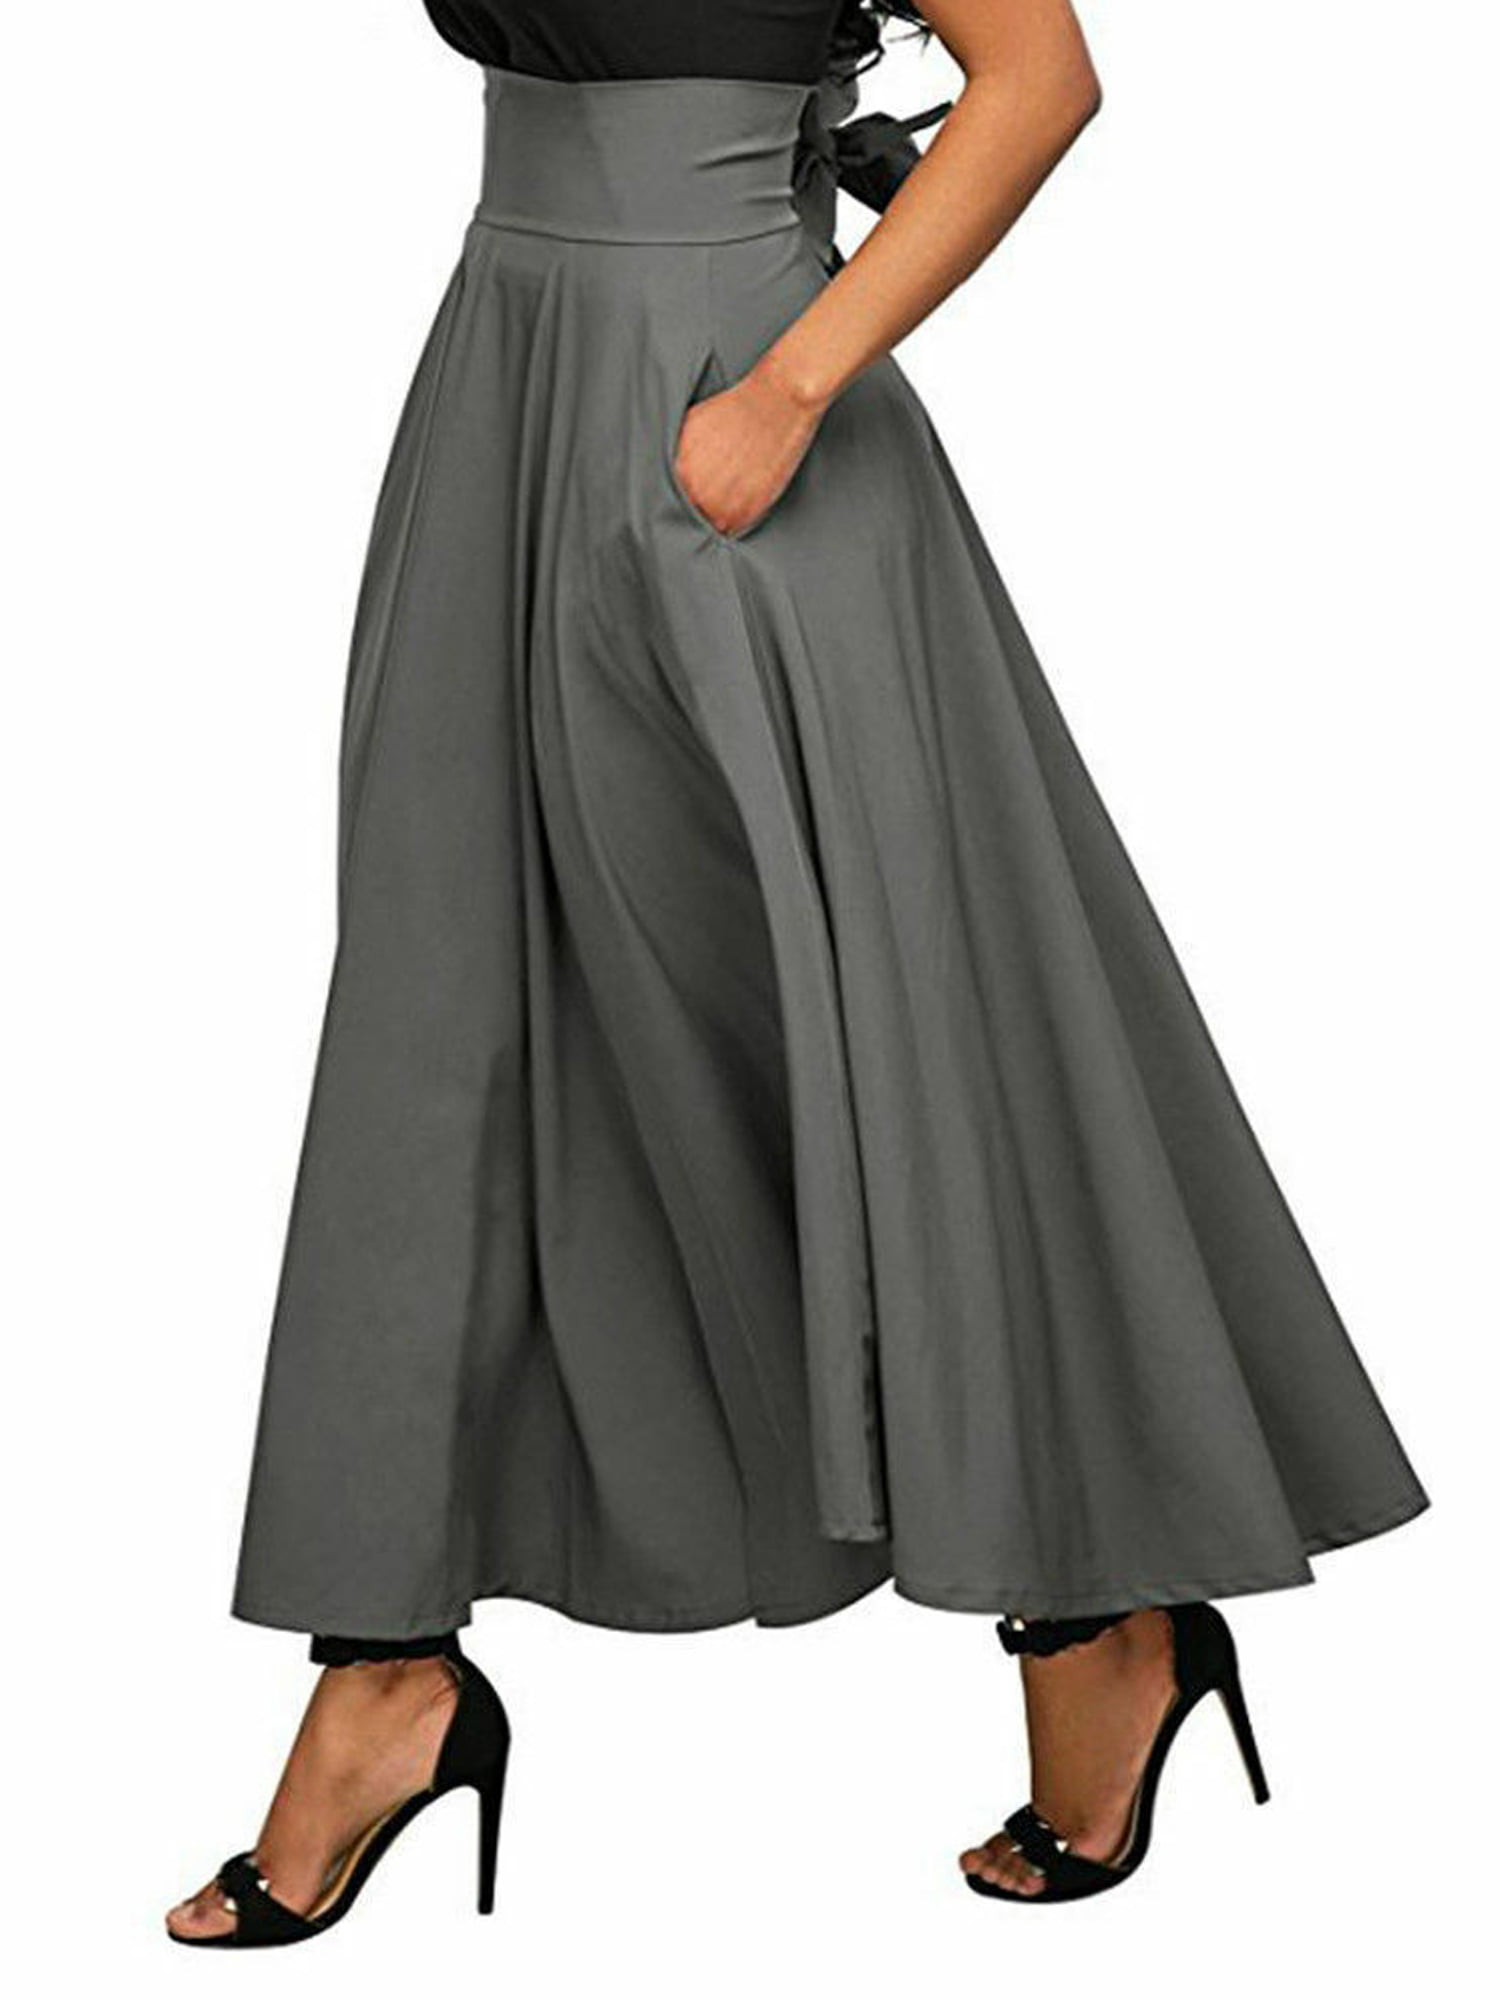 Long skirt maxi dress chiffon retro solid pleated swing high waist women flared